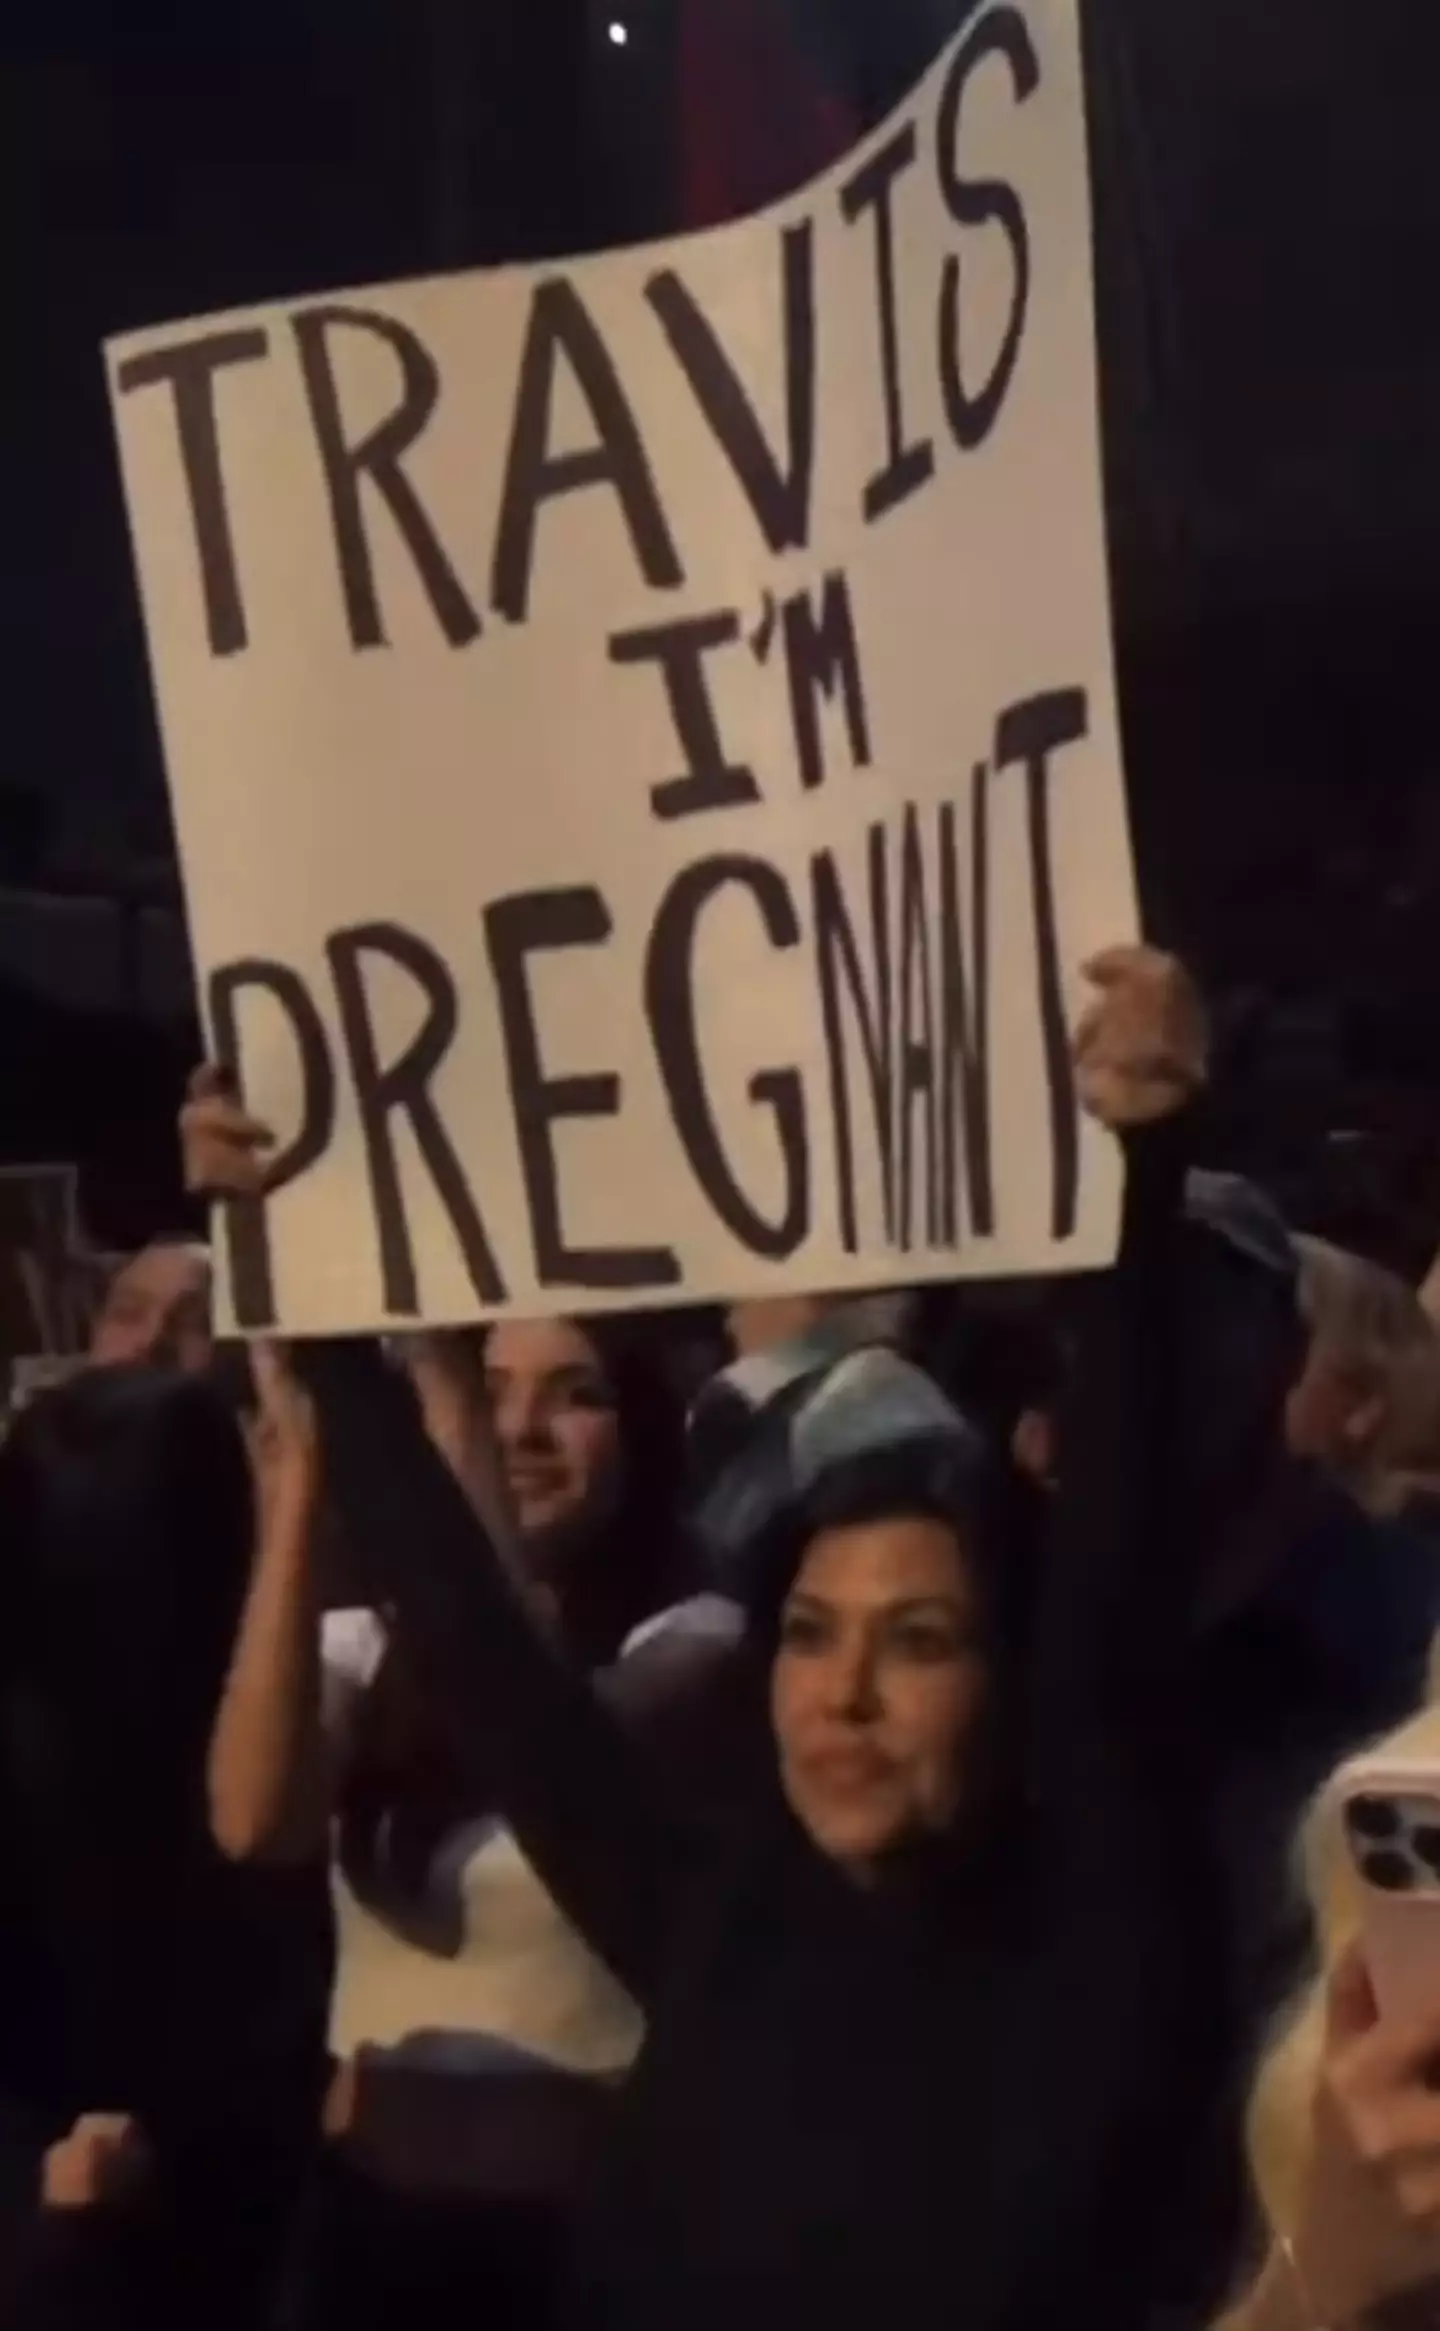 Kourtney Kardashian held up a 'Travis I'm pregnant' sign at the Blink-182 gig.